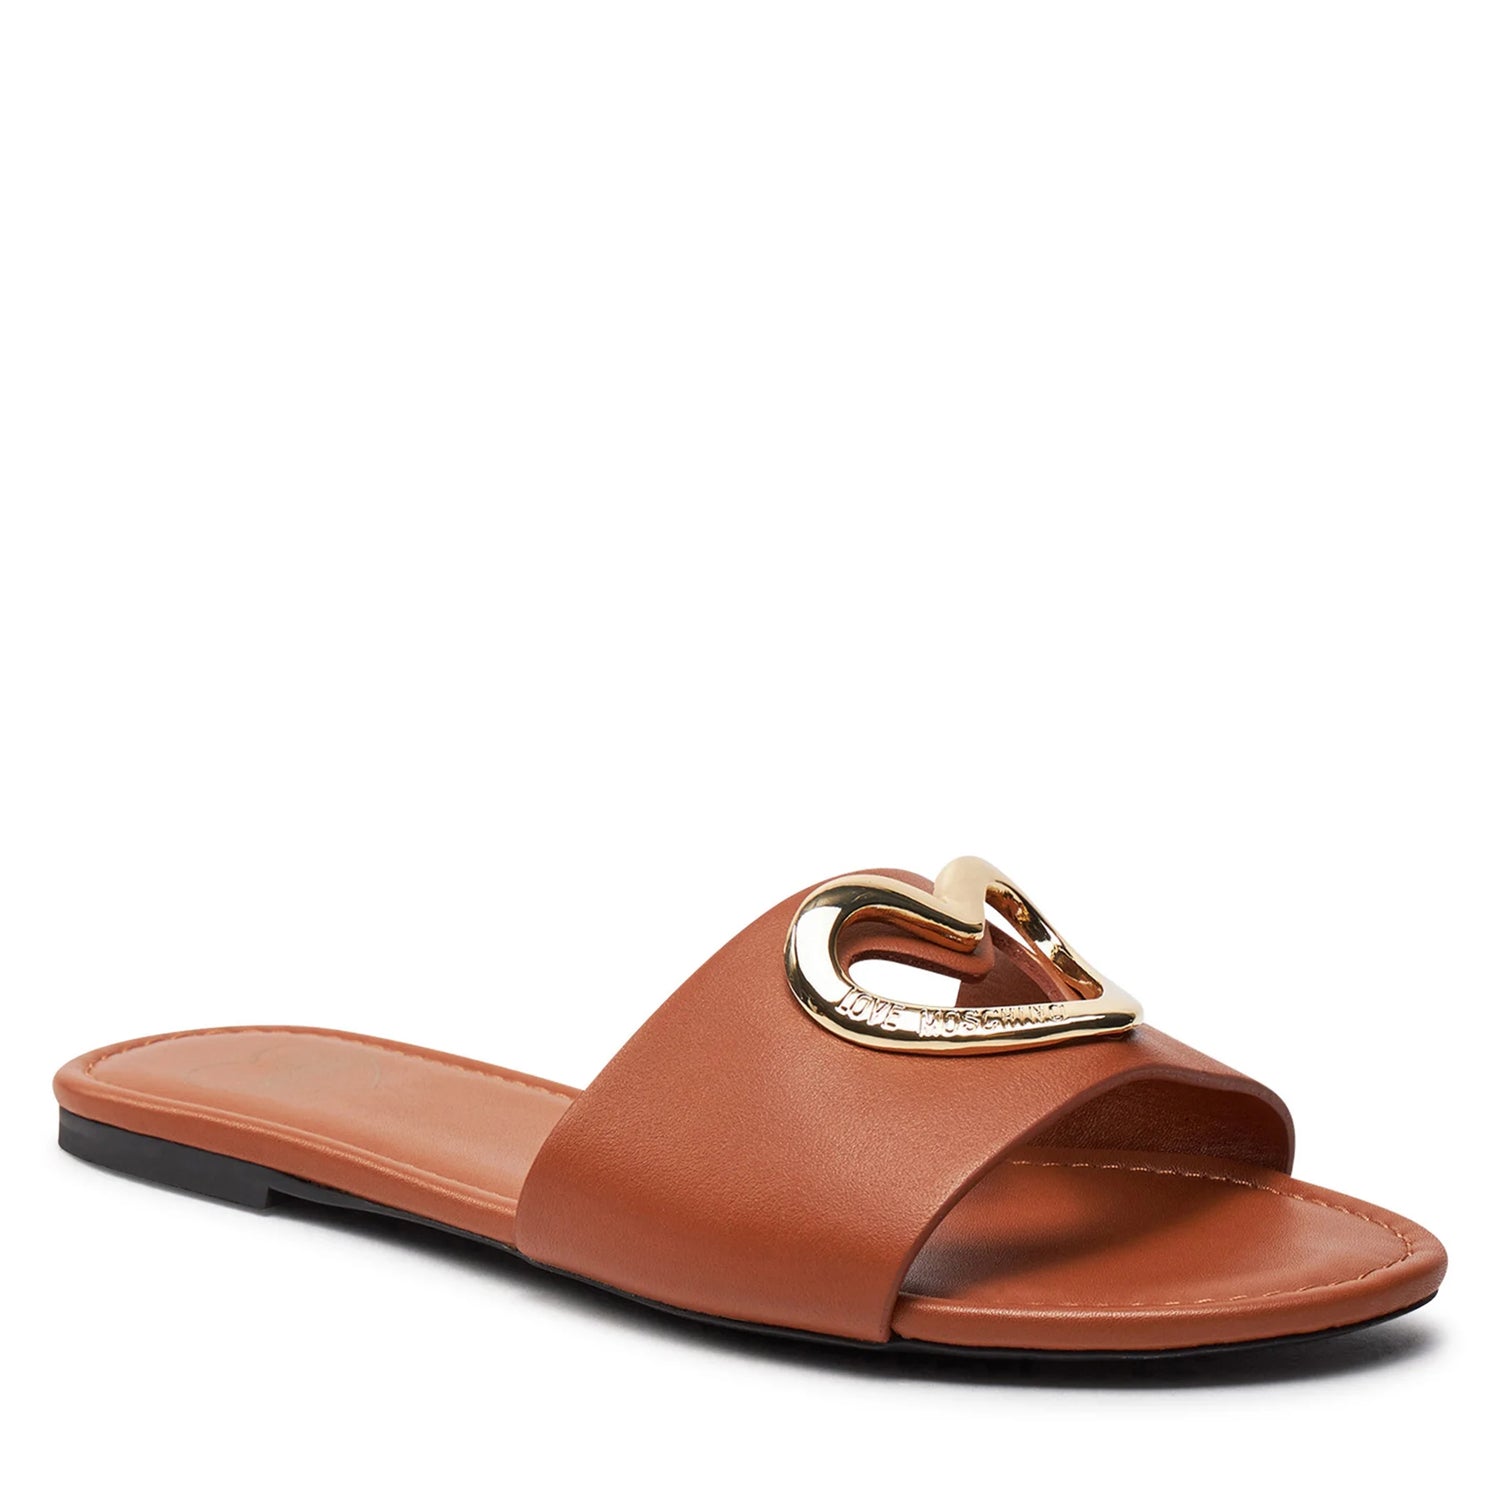 moschino-sandalias-sandals-ja2843-brown-gold-castanho-ouro_shot1